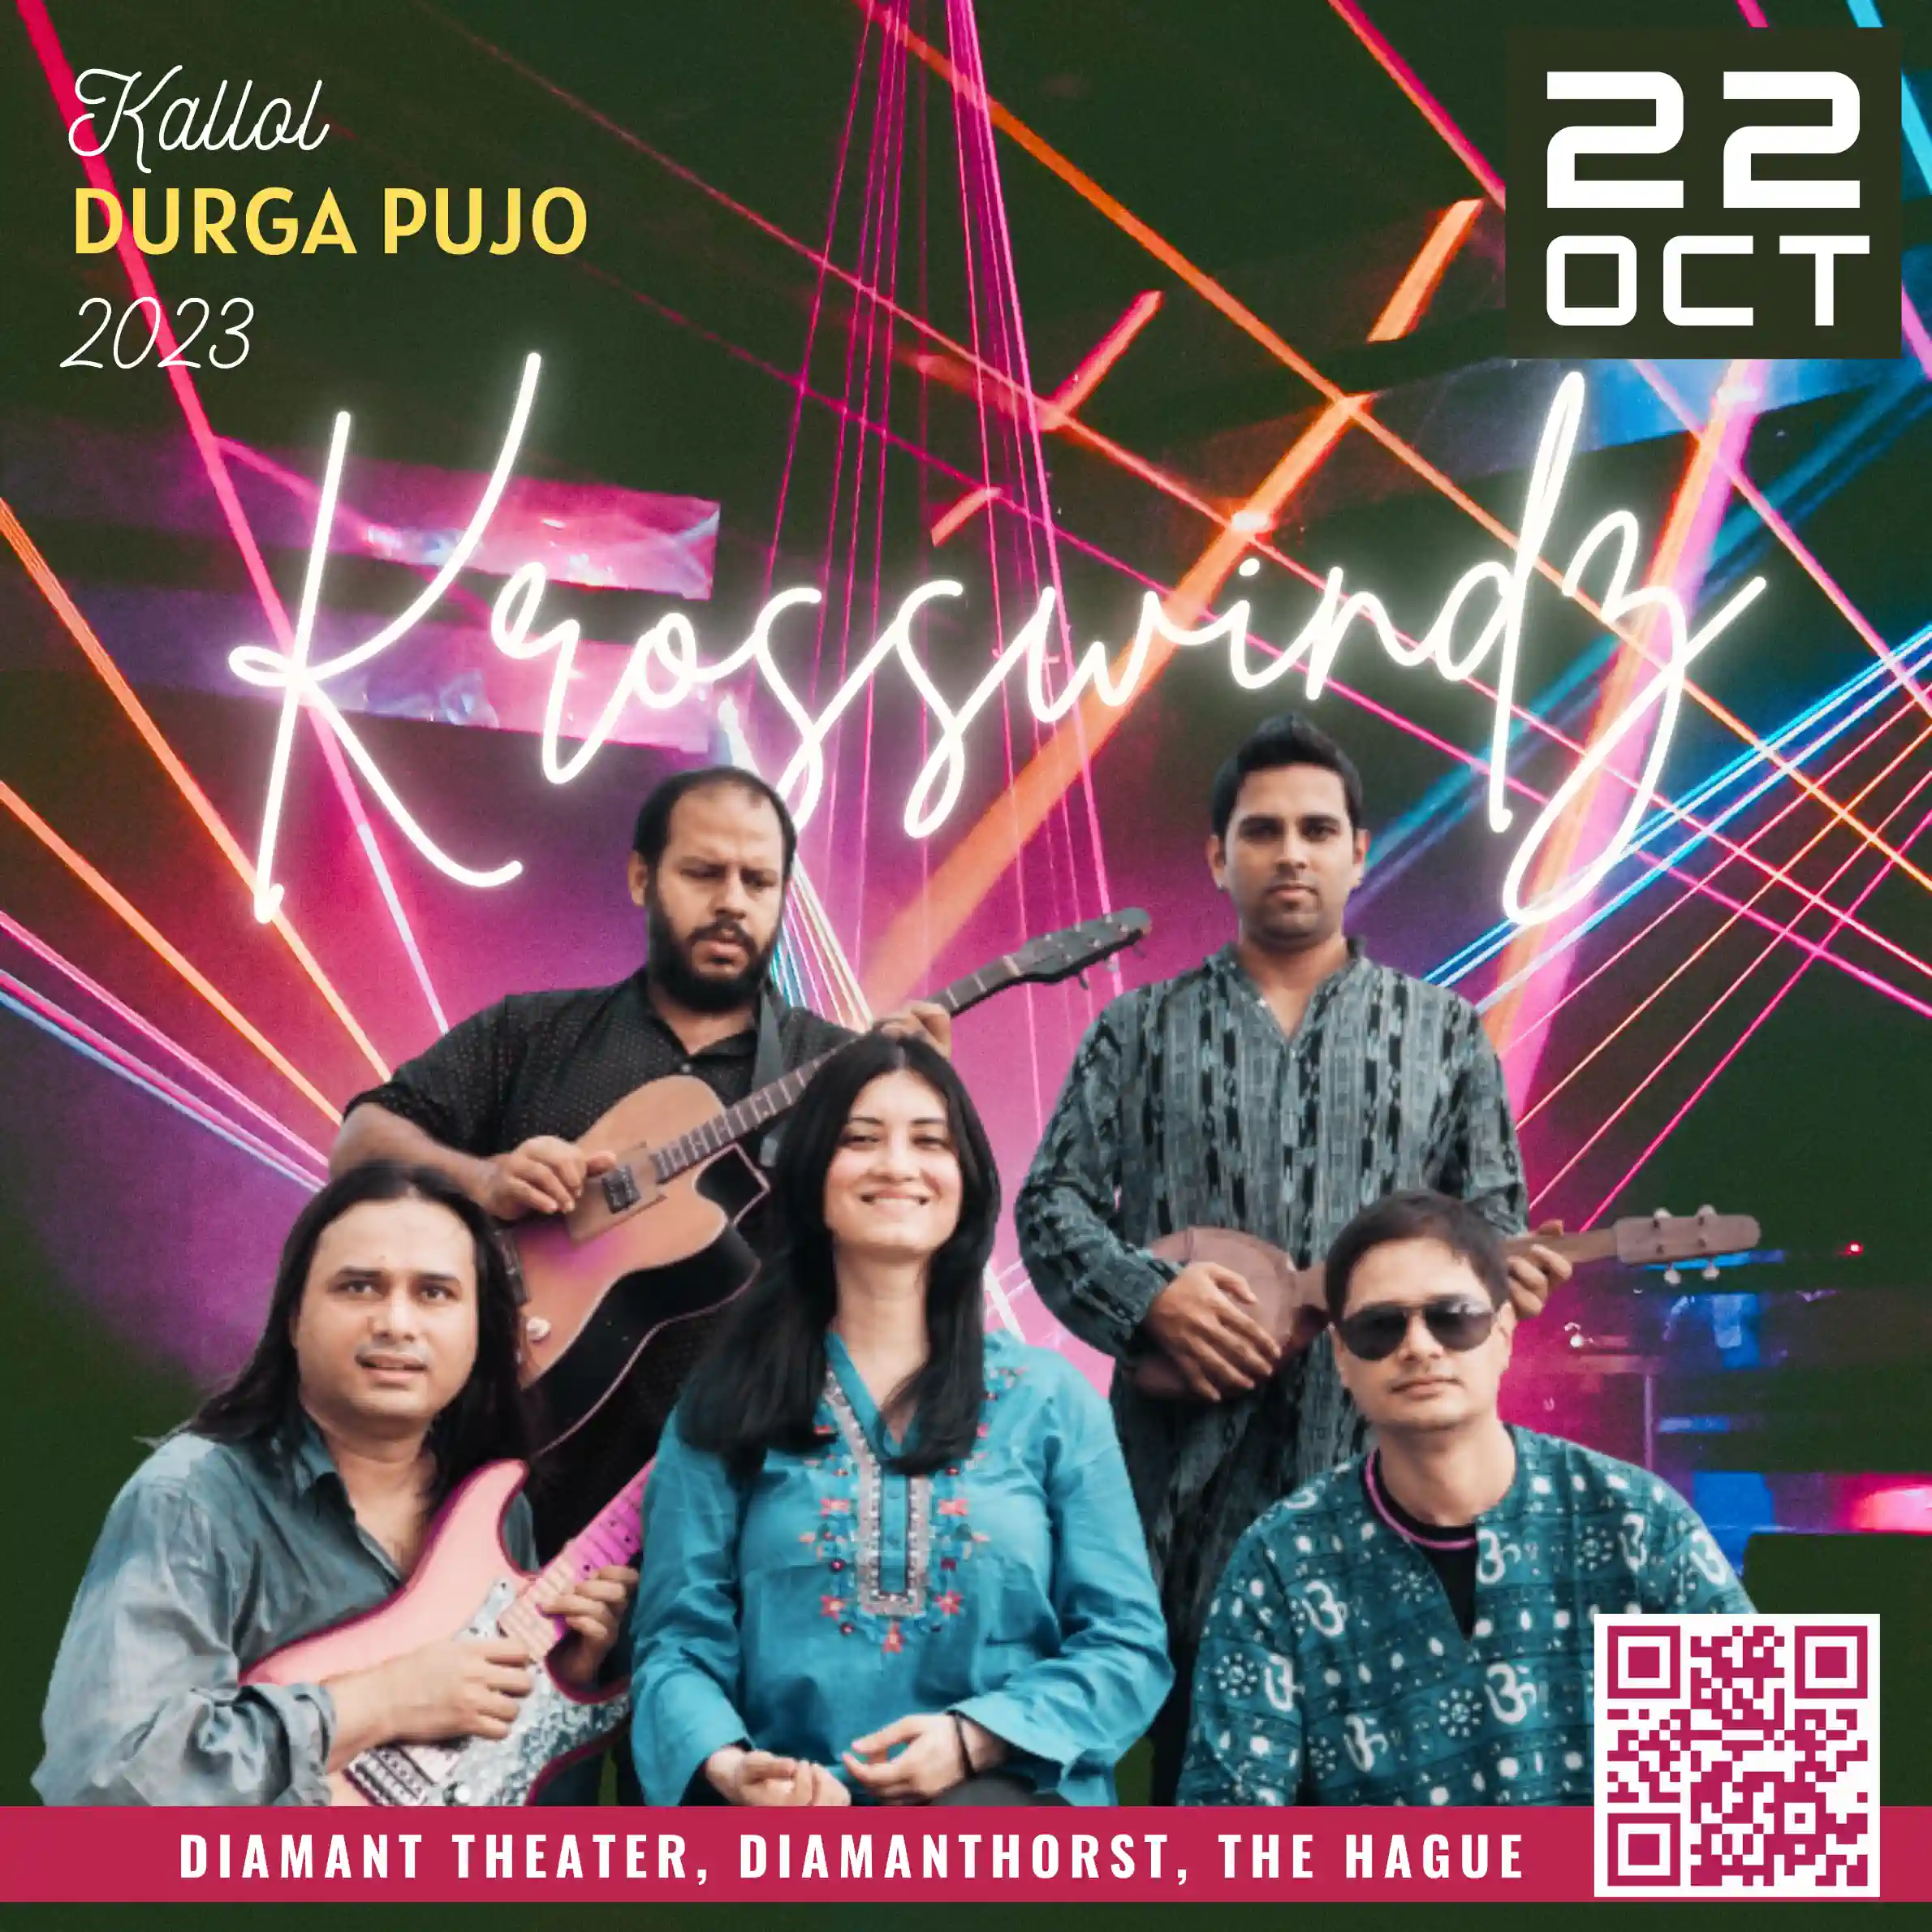 Krosswindz at Kallol Durga Pujo 2023